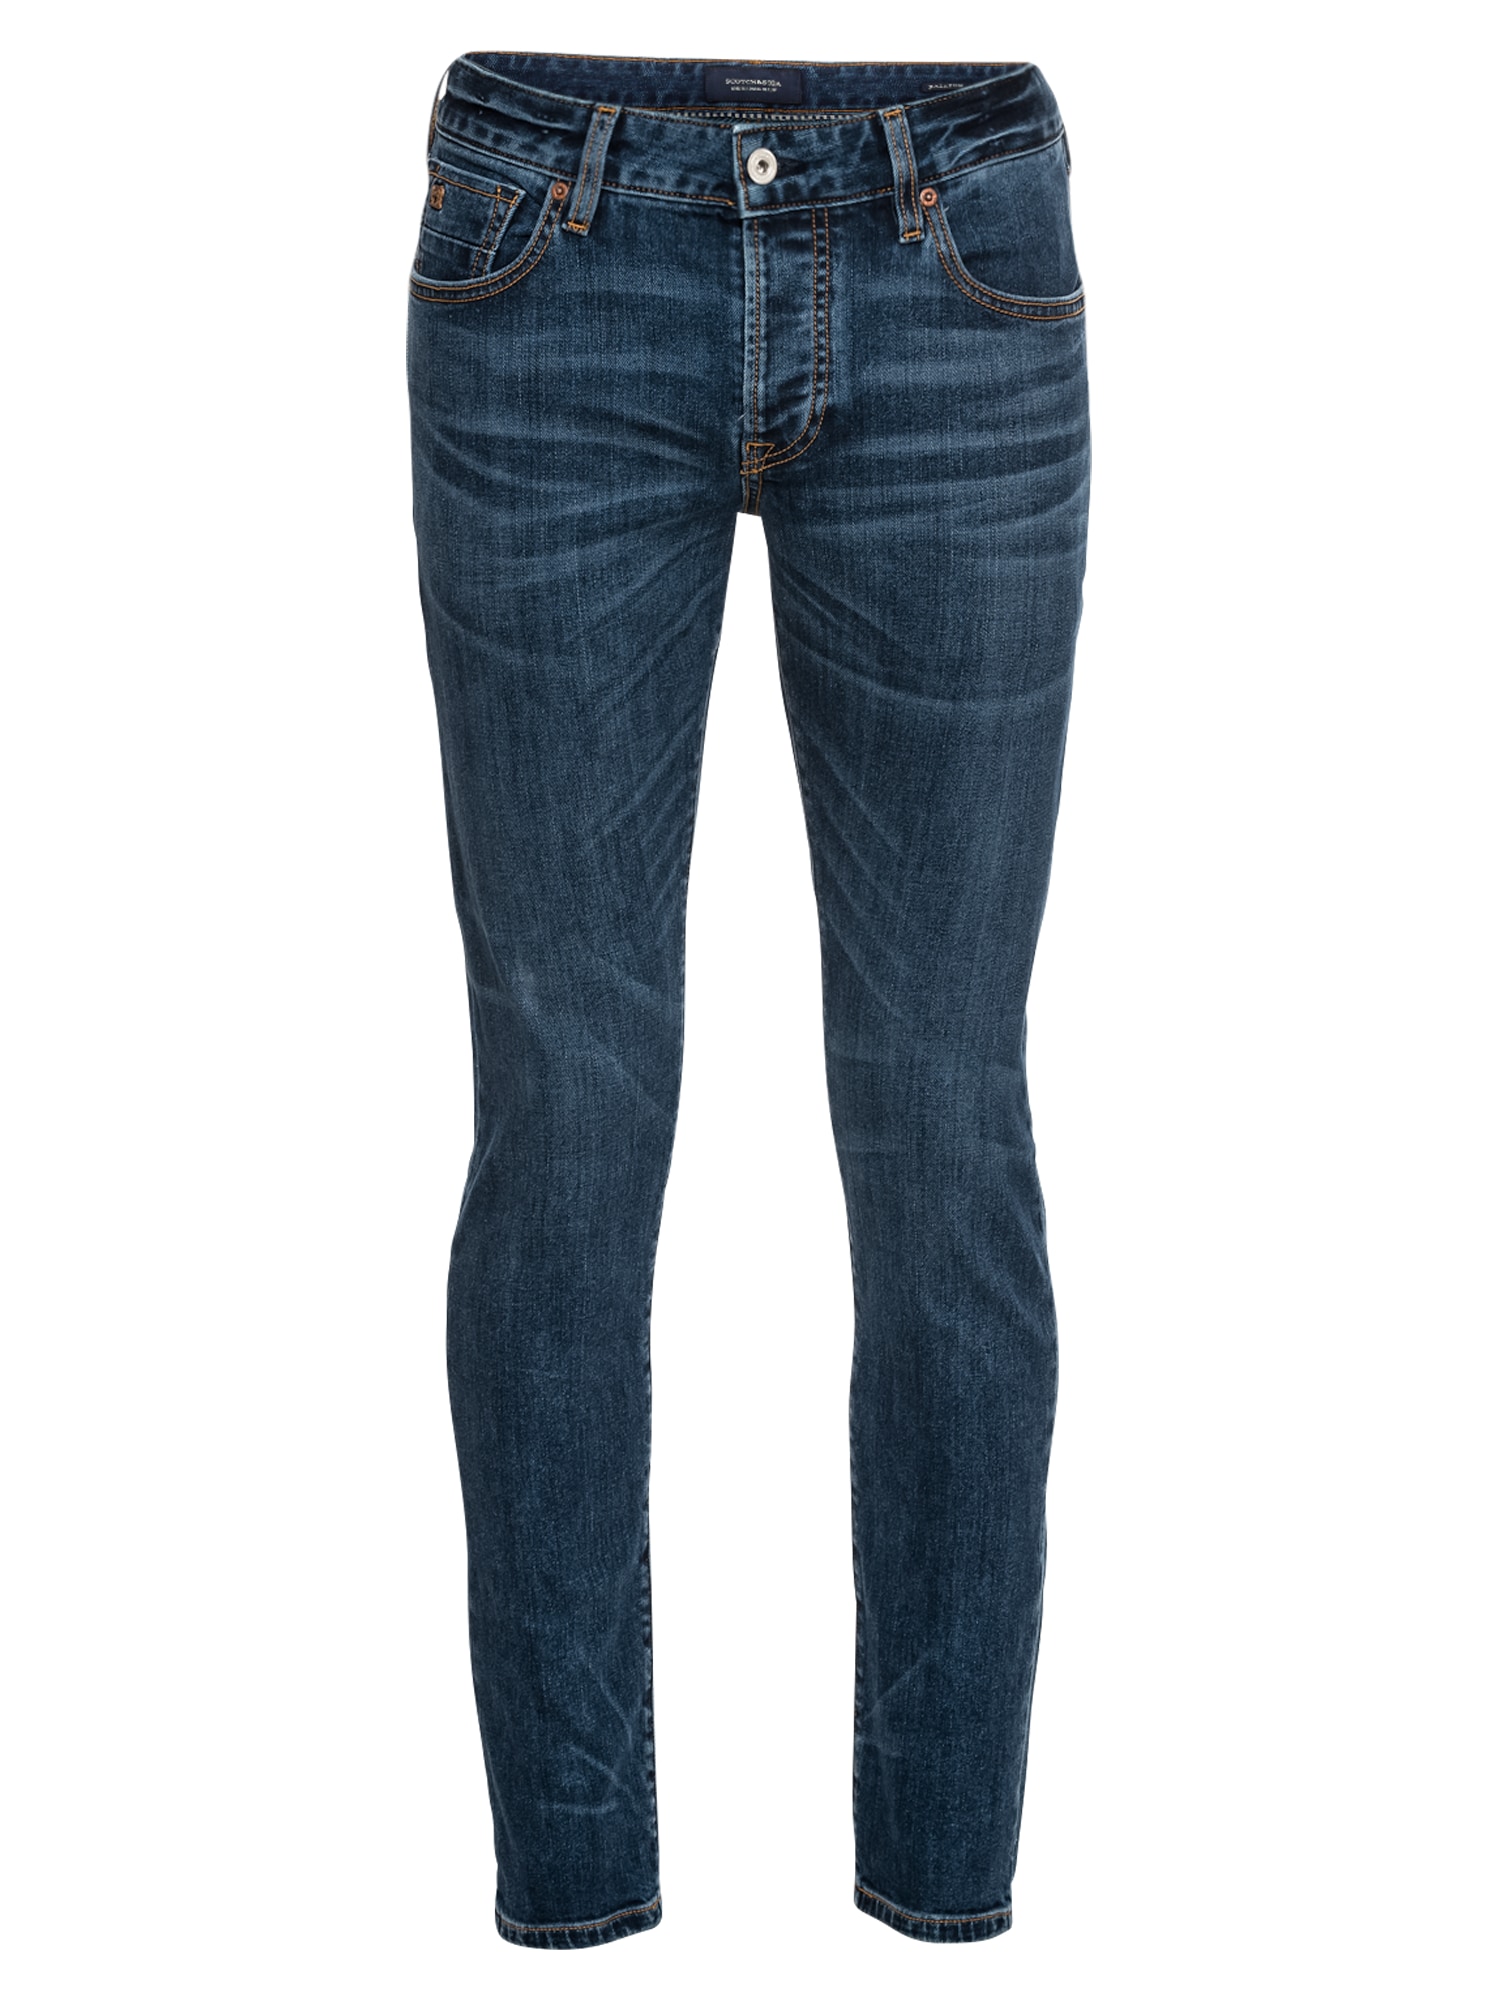 Material: Jeans; Muster: Unifarben; Farben pro Pack: Eine Farbe pro Pack; Design: Button Fly, 5-Pocket-Style; Passform: Regular; Länge: Lang/Maxi; Elastizität: Leicht elastisch - 0